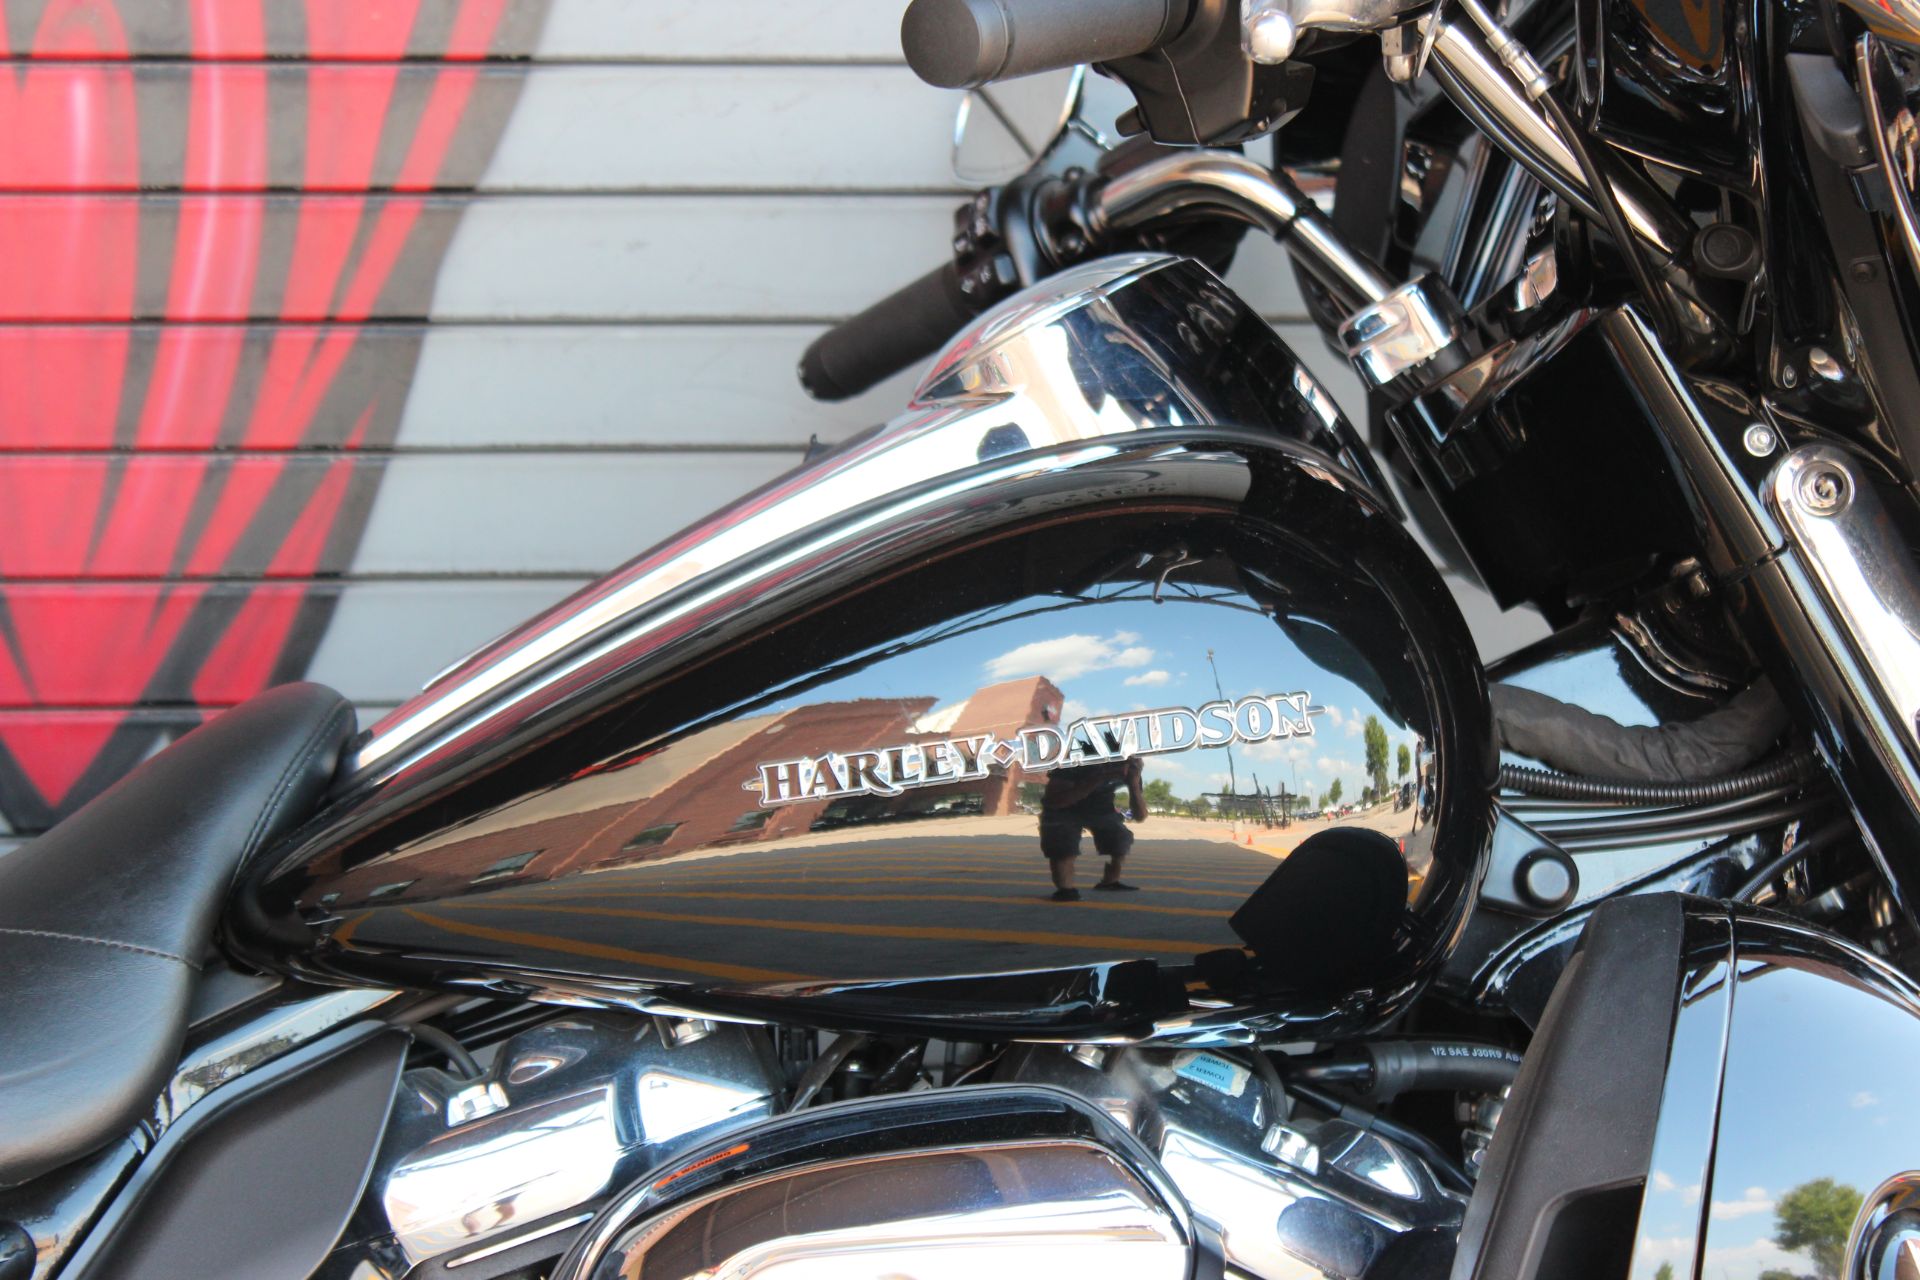 2019 Harley-Davidson Ultra Limited in Carrollton, Texas - Photo 5